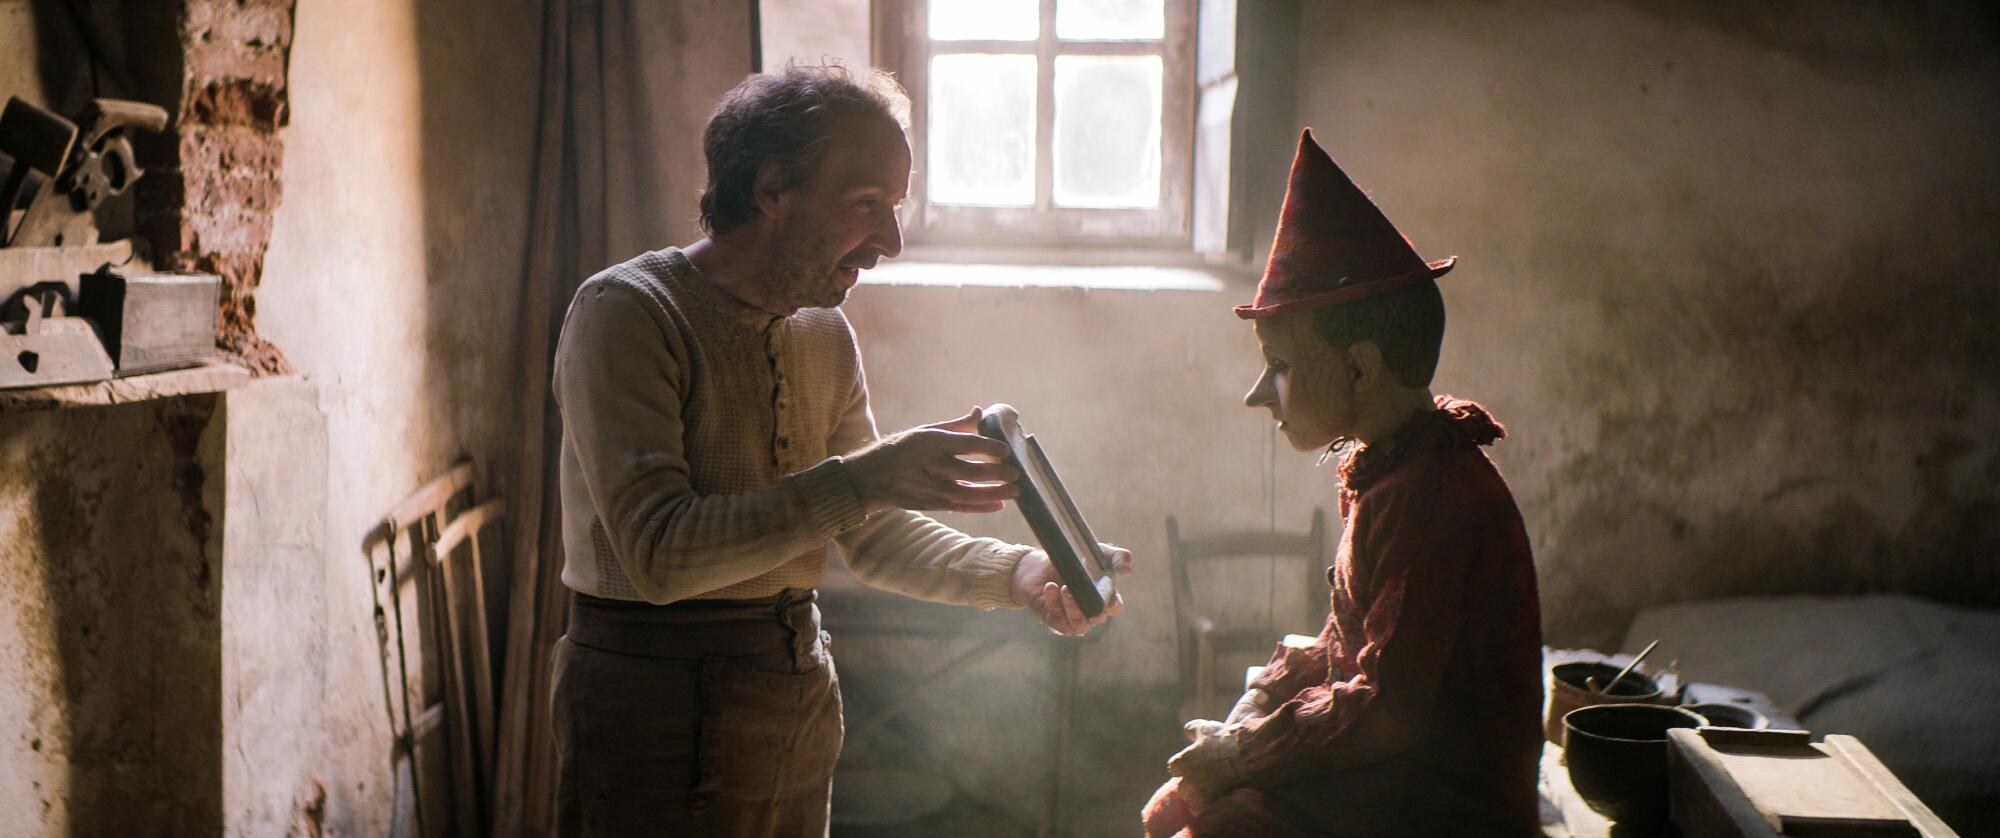 Roberto Benigni as Geppetto, and Federico Ielapi as Pinocchio, in "Pinocchio."